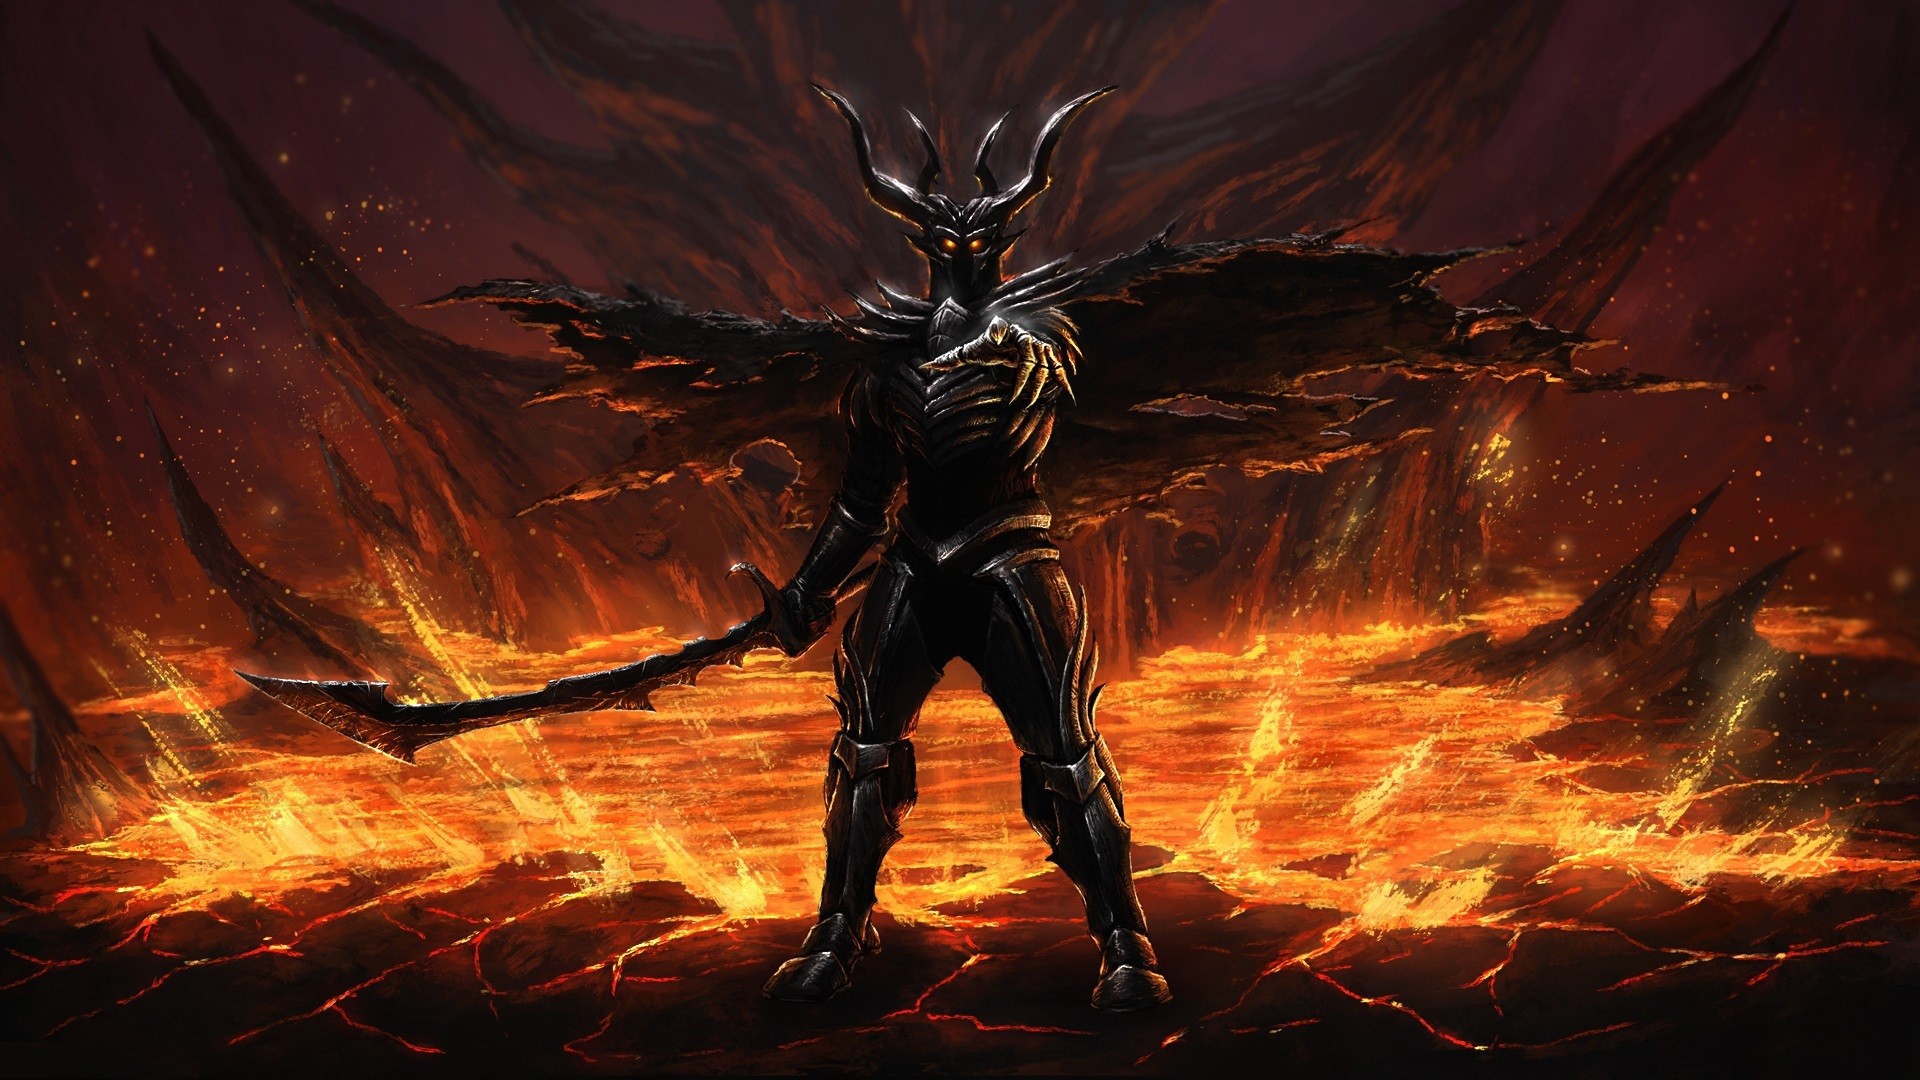 General 1920x1080 fantasy art demon dark fantasy glowing eyes sword weapon creature lava